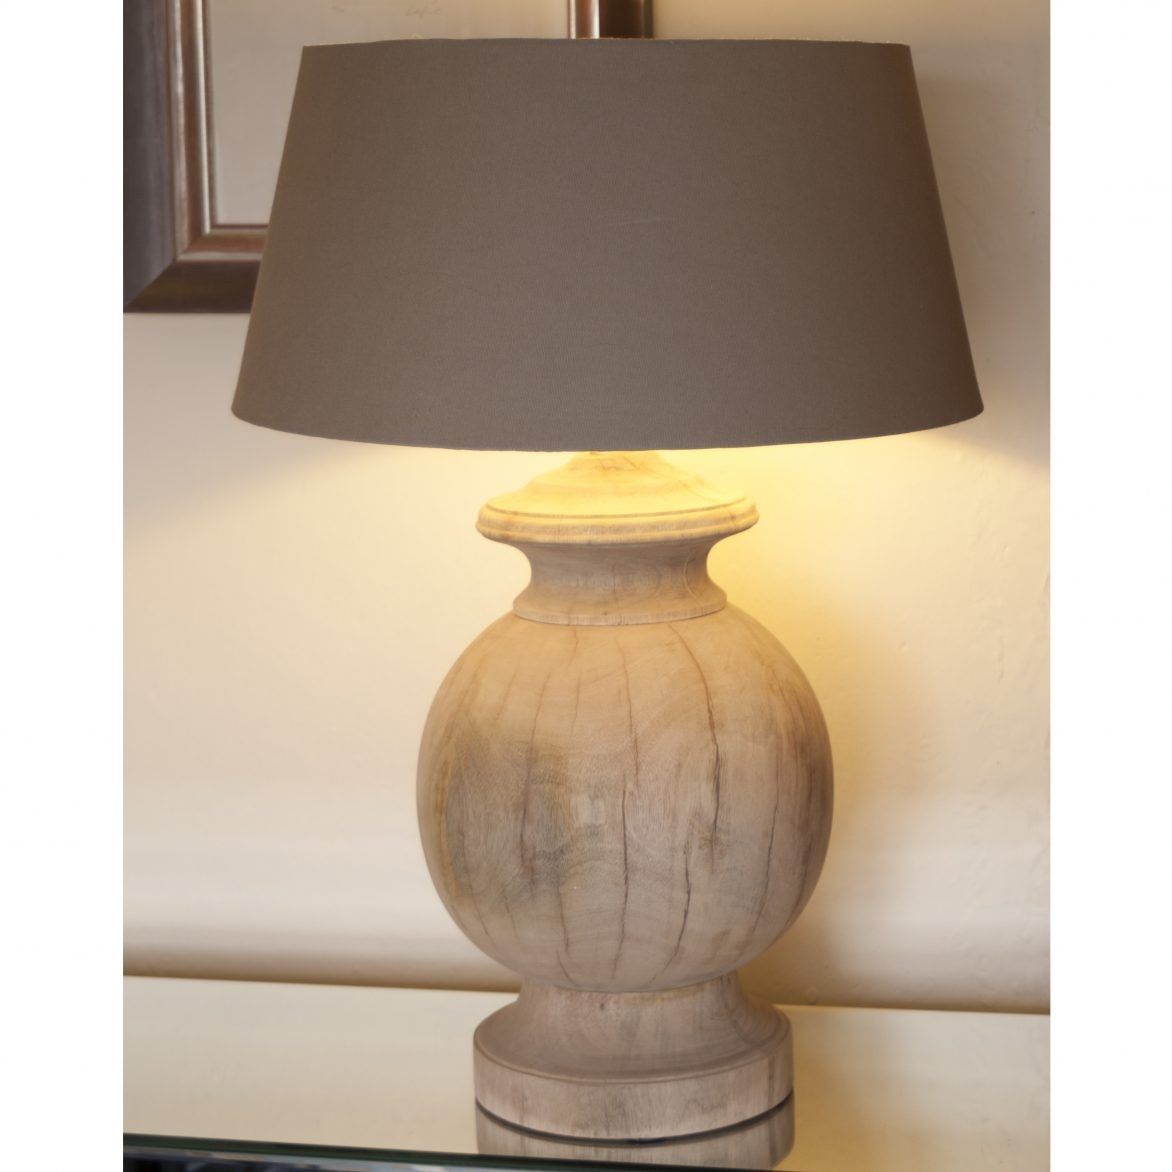 Buy Table Lamp Grey Bedside Lamps Bedroom Amazon Nightstand Night Within Amazon Living Room Table Lamps (Photo 3 of 15)